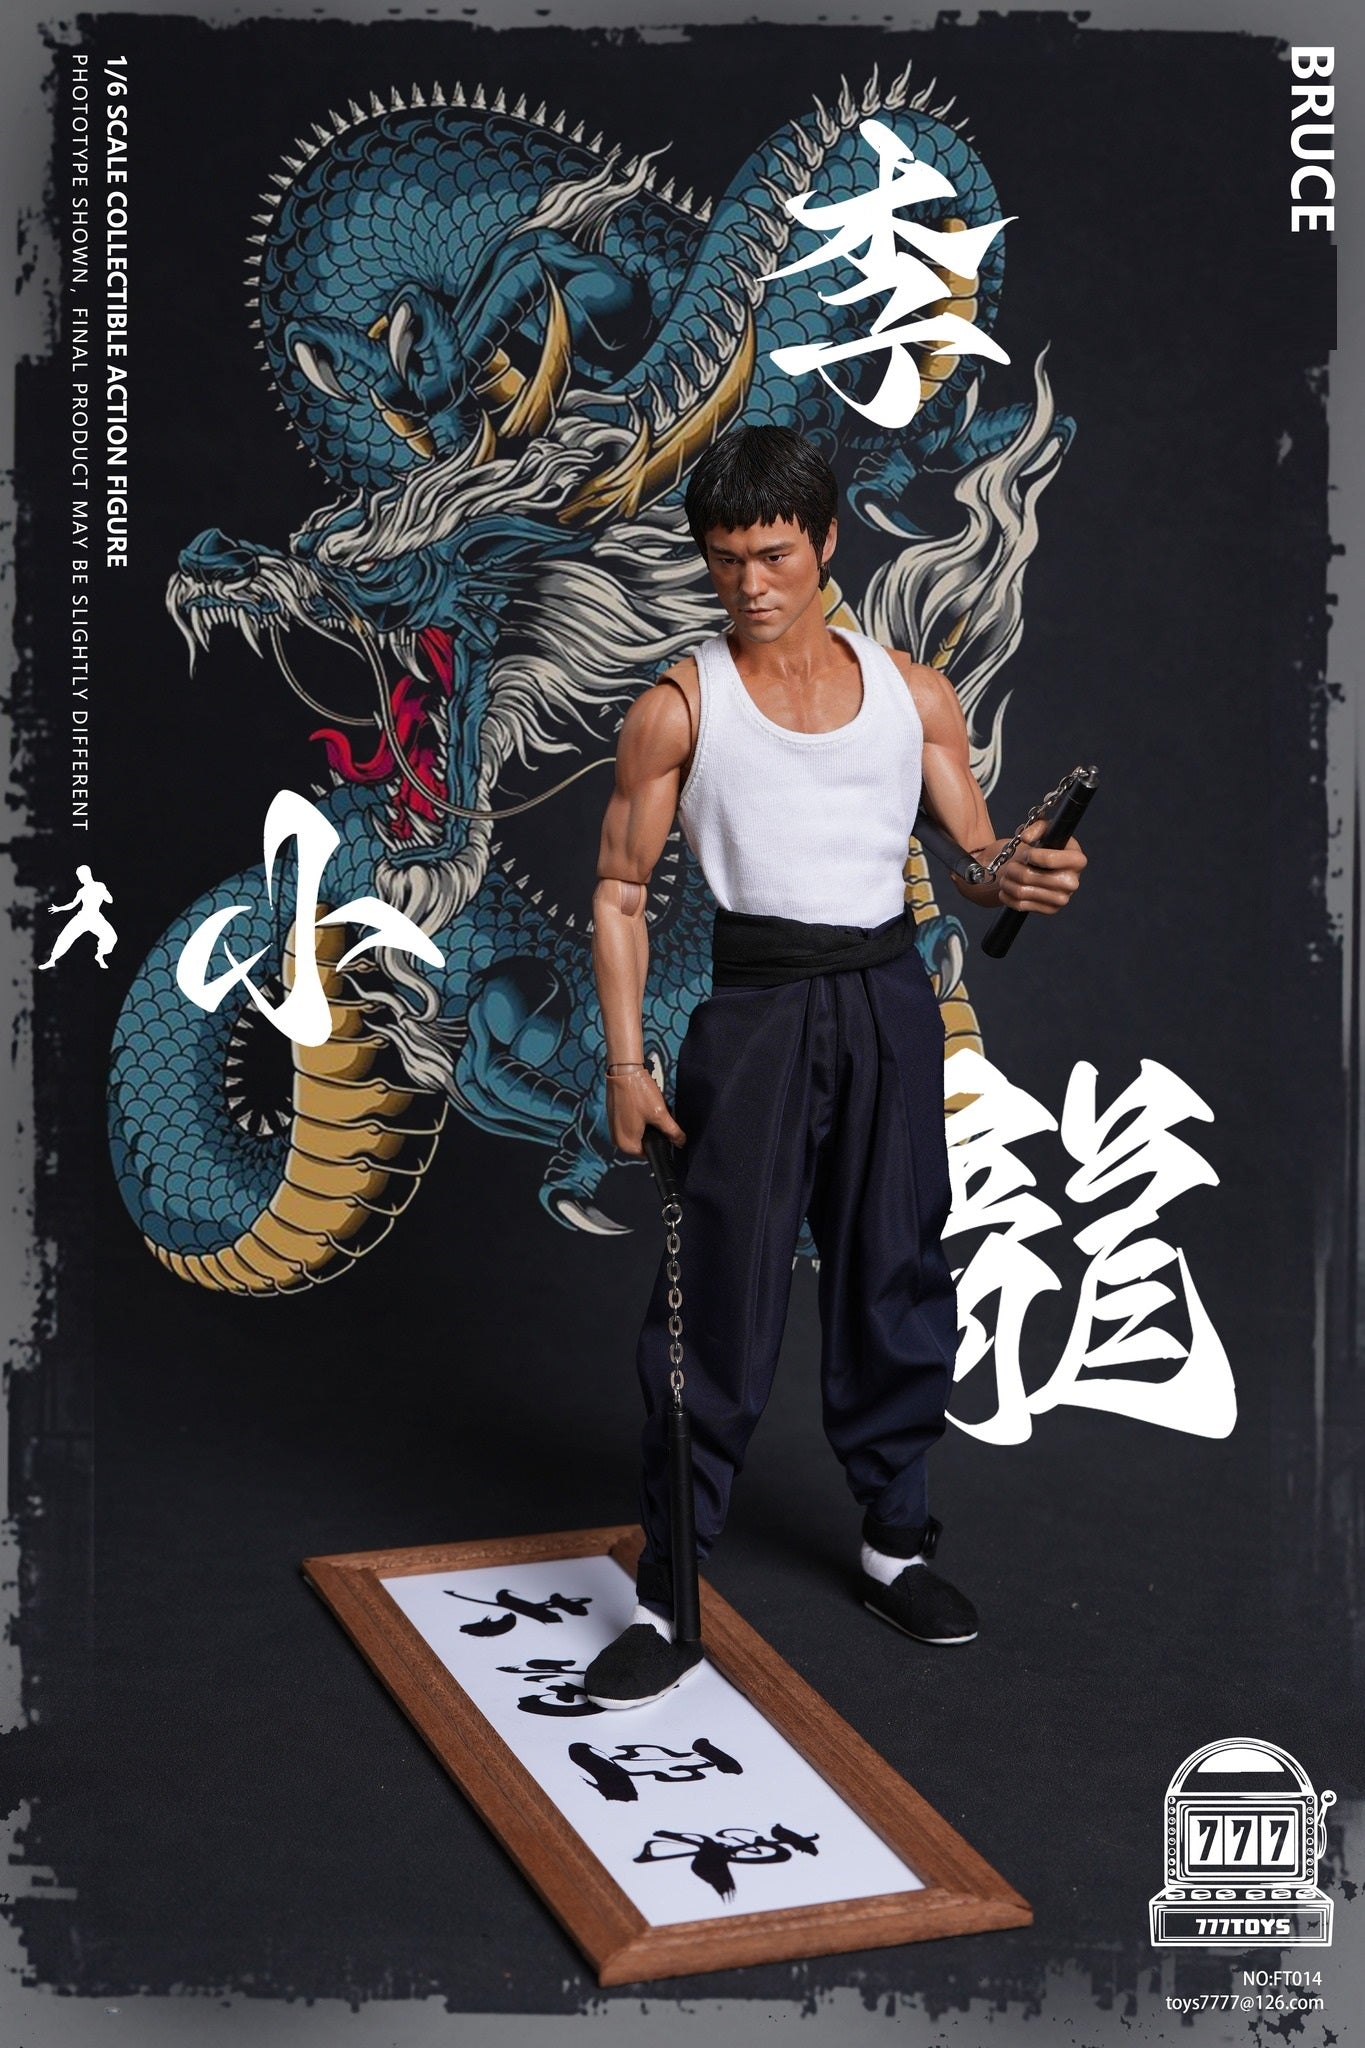 Preventa Figura Kung Fu Master marca 777Toys FT014 escala 1/6